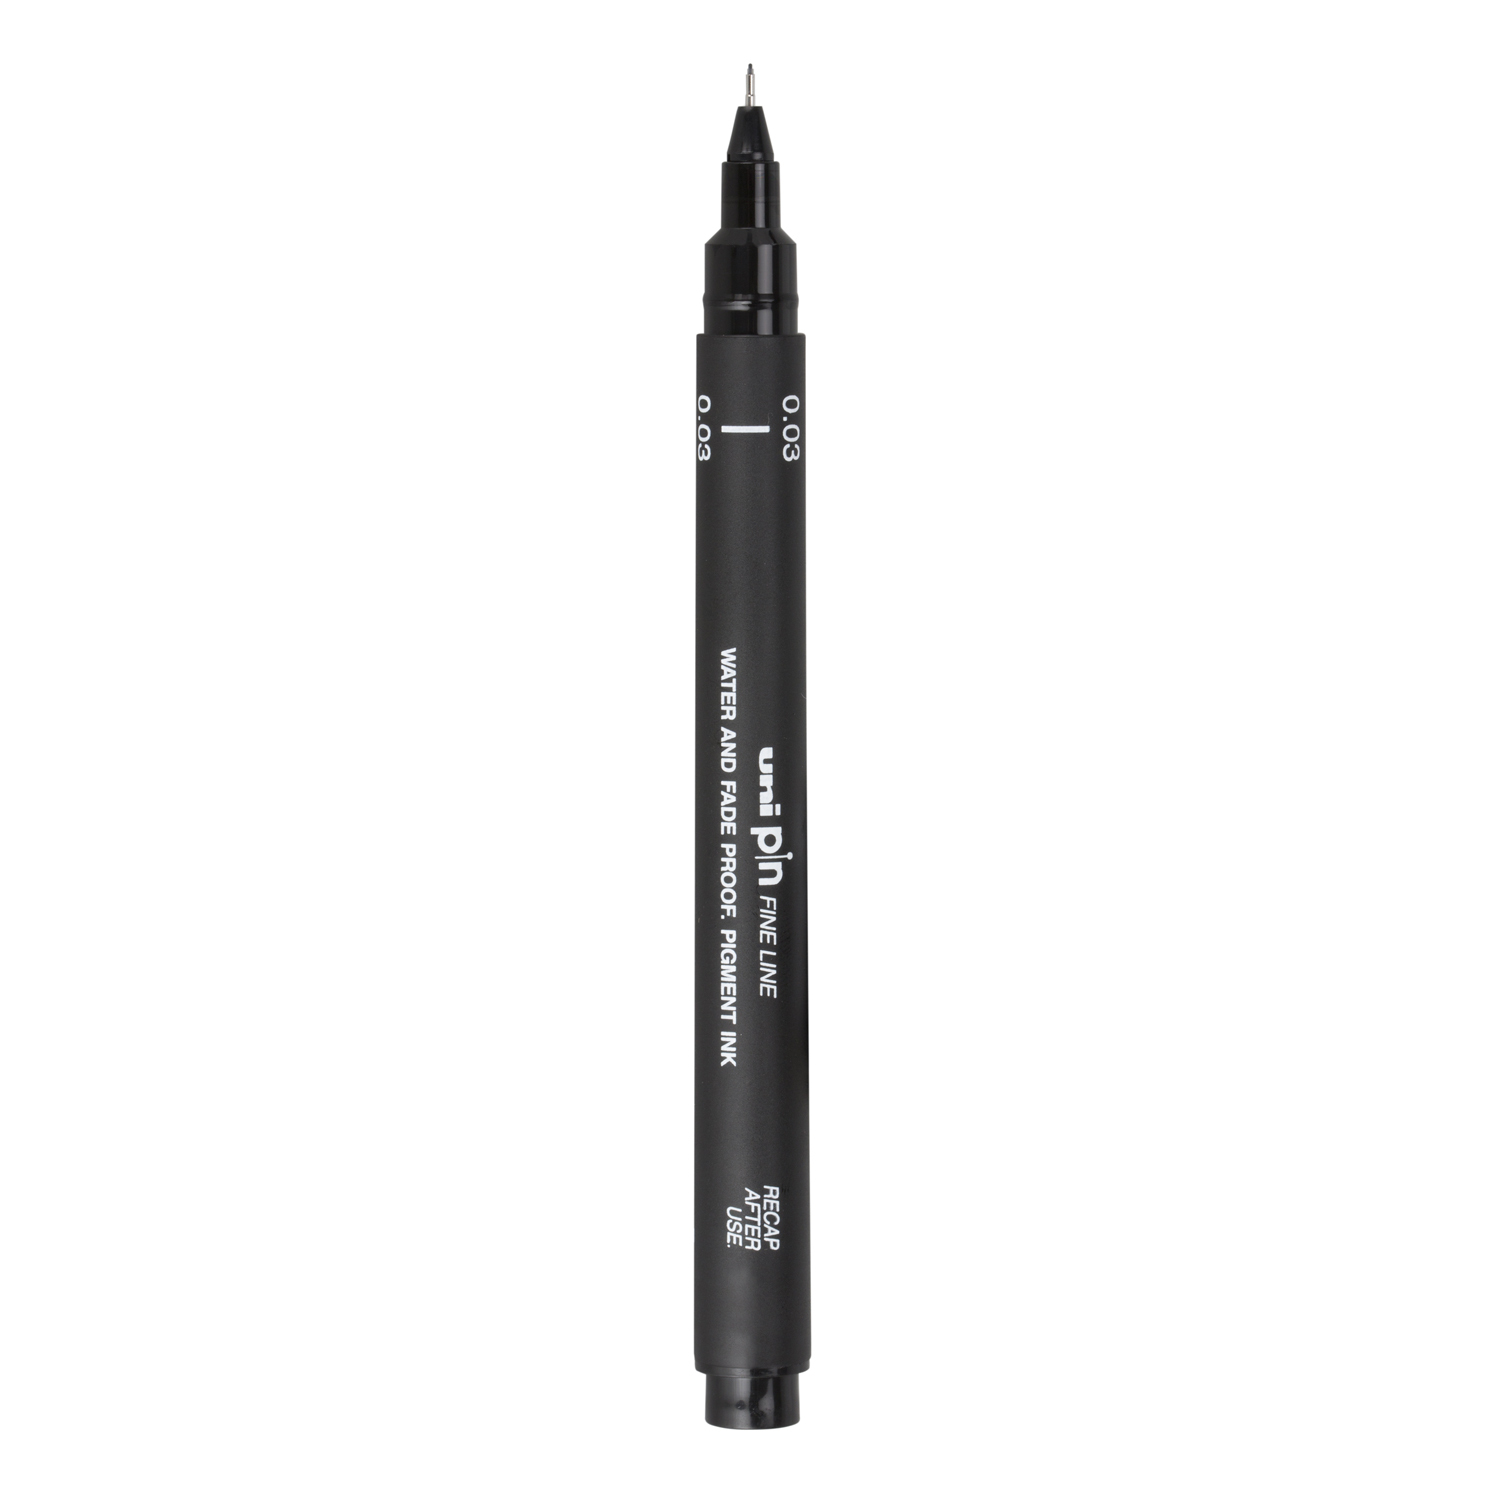 Uniball Pin Fine Liner Drawing Pen - Black / 0.03mm Image 2